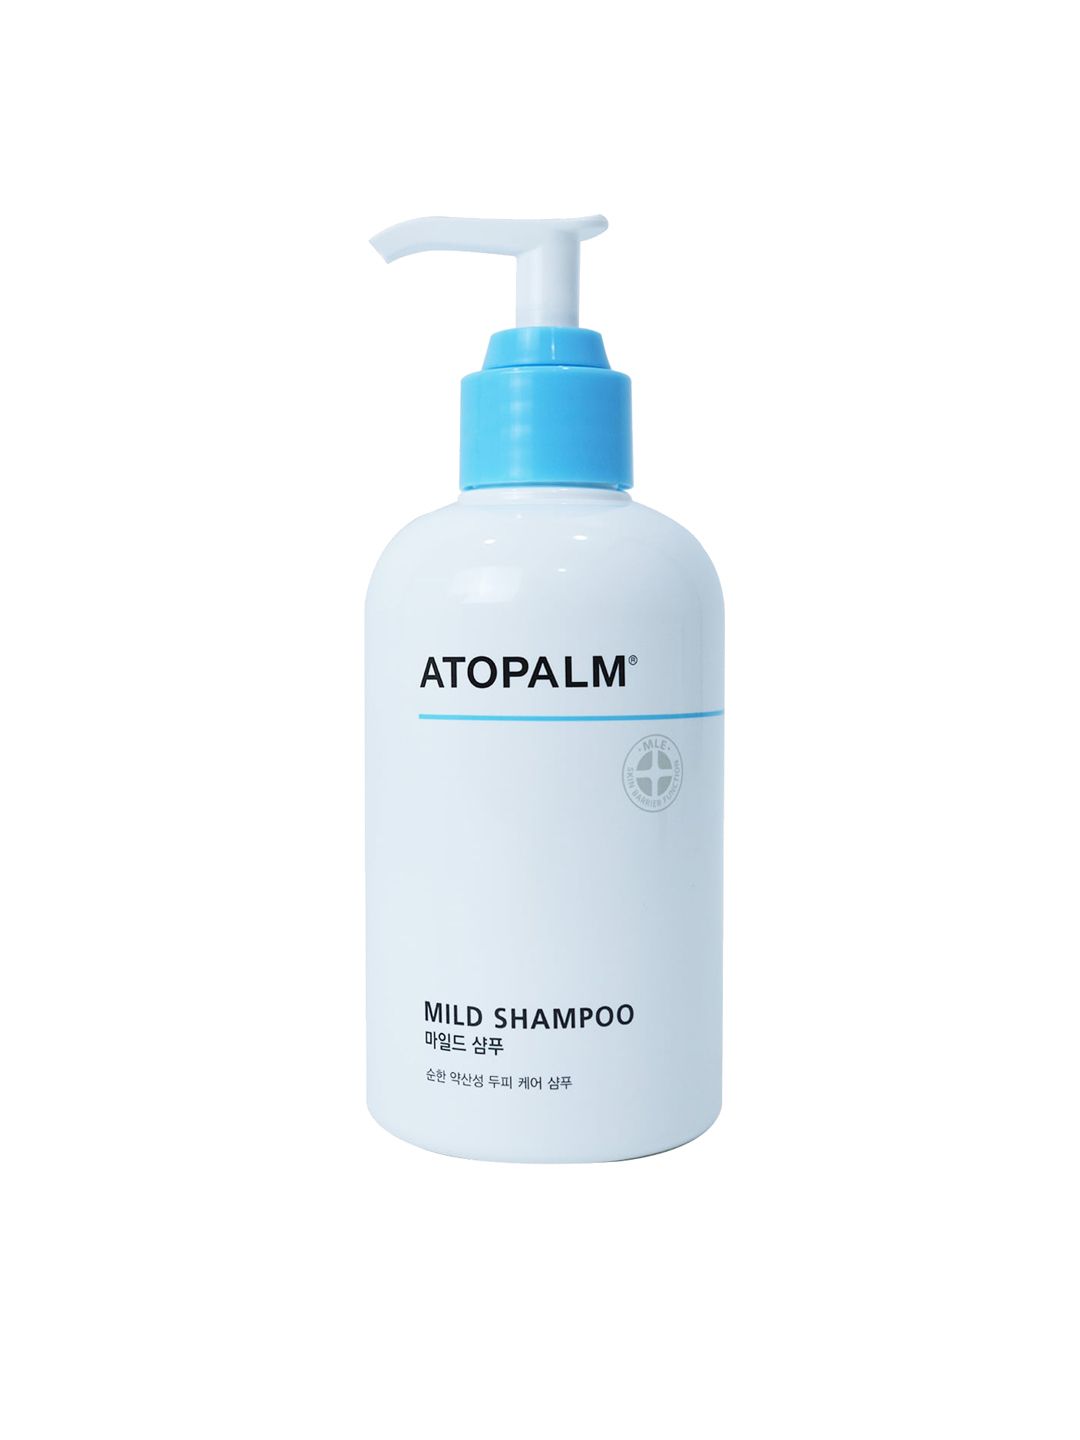 ATOPALM Unisex Mild Shampoo 300ml Price in India